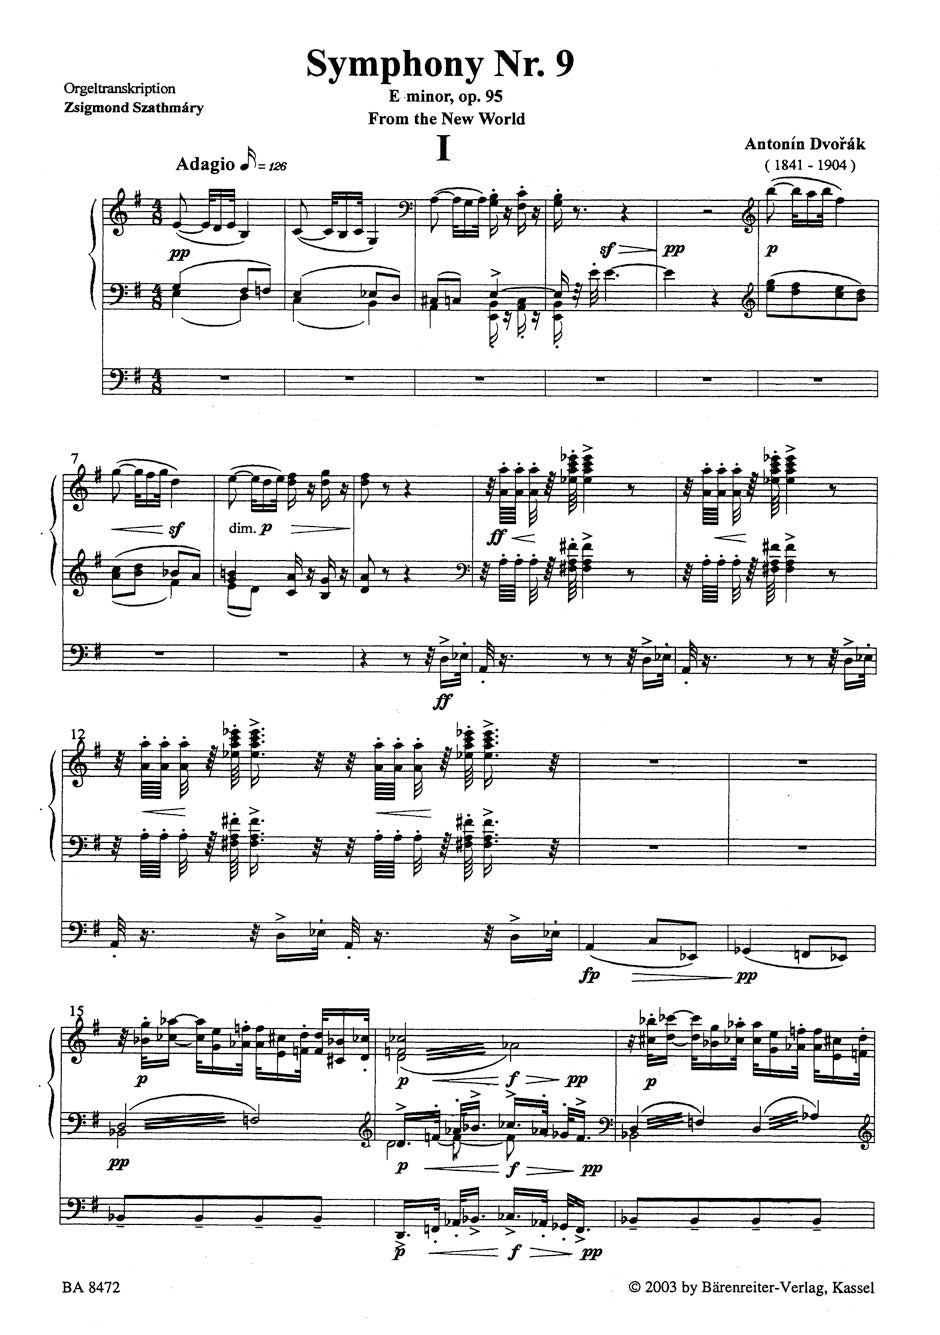 Dvorak Symphony No. 9 op. 95 "From the New World" -Transcription for organ-